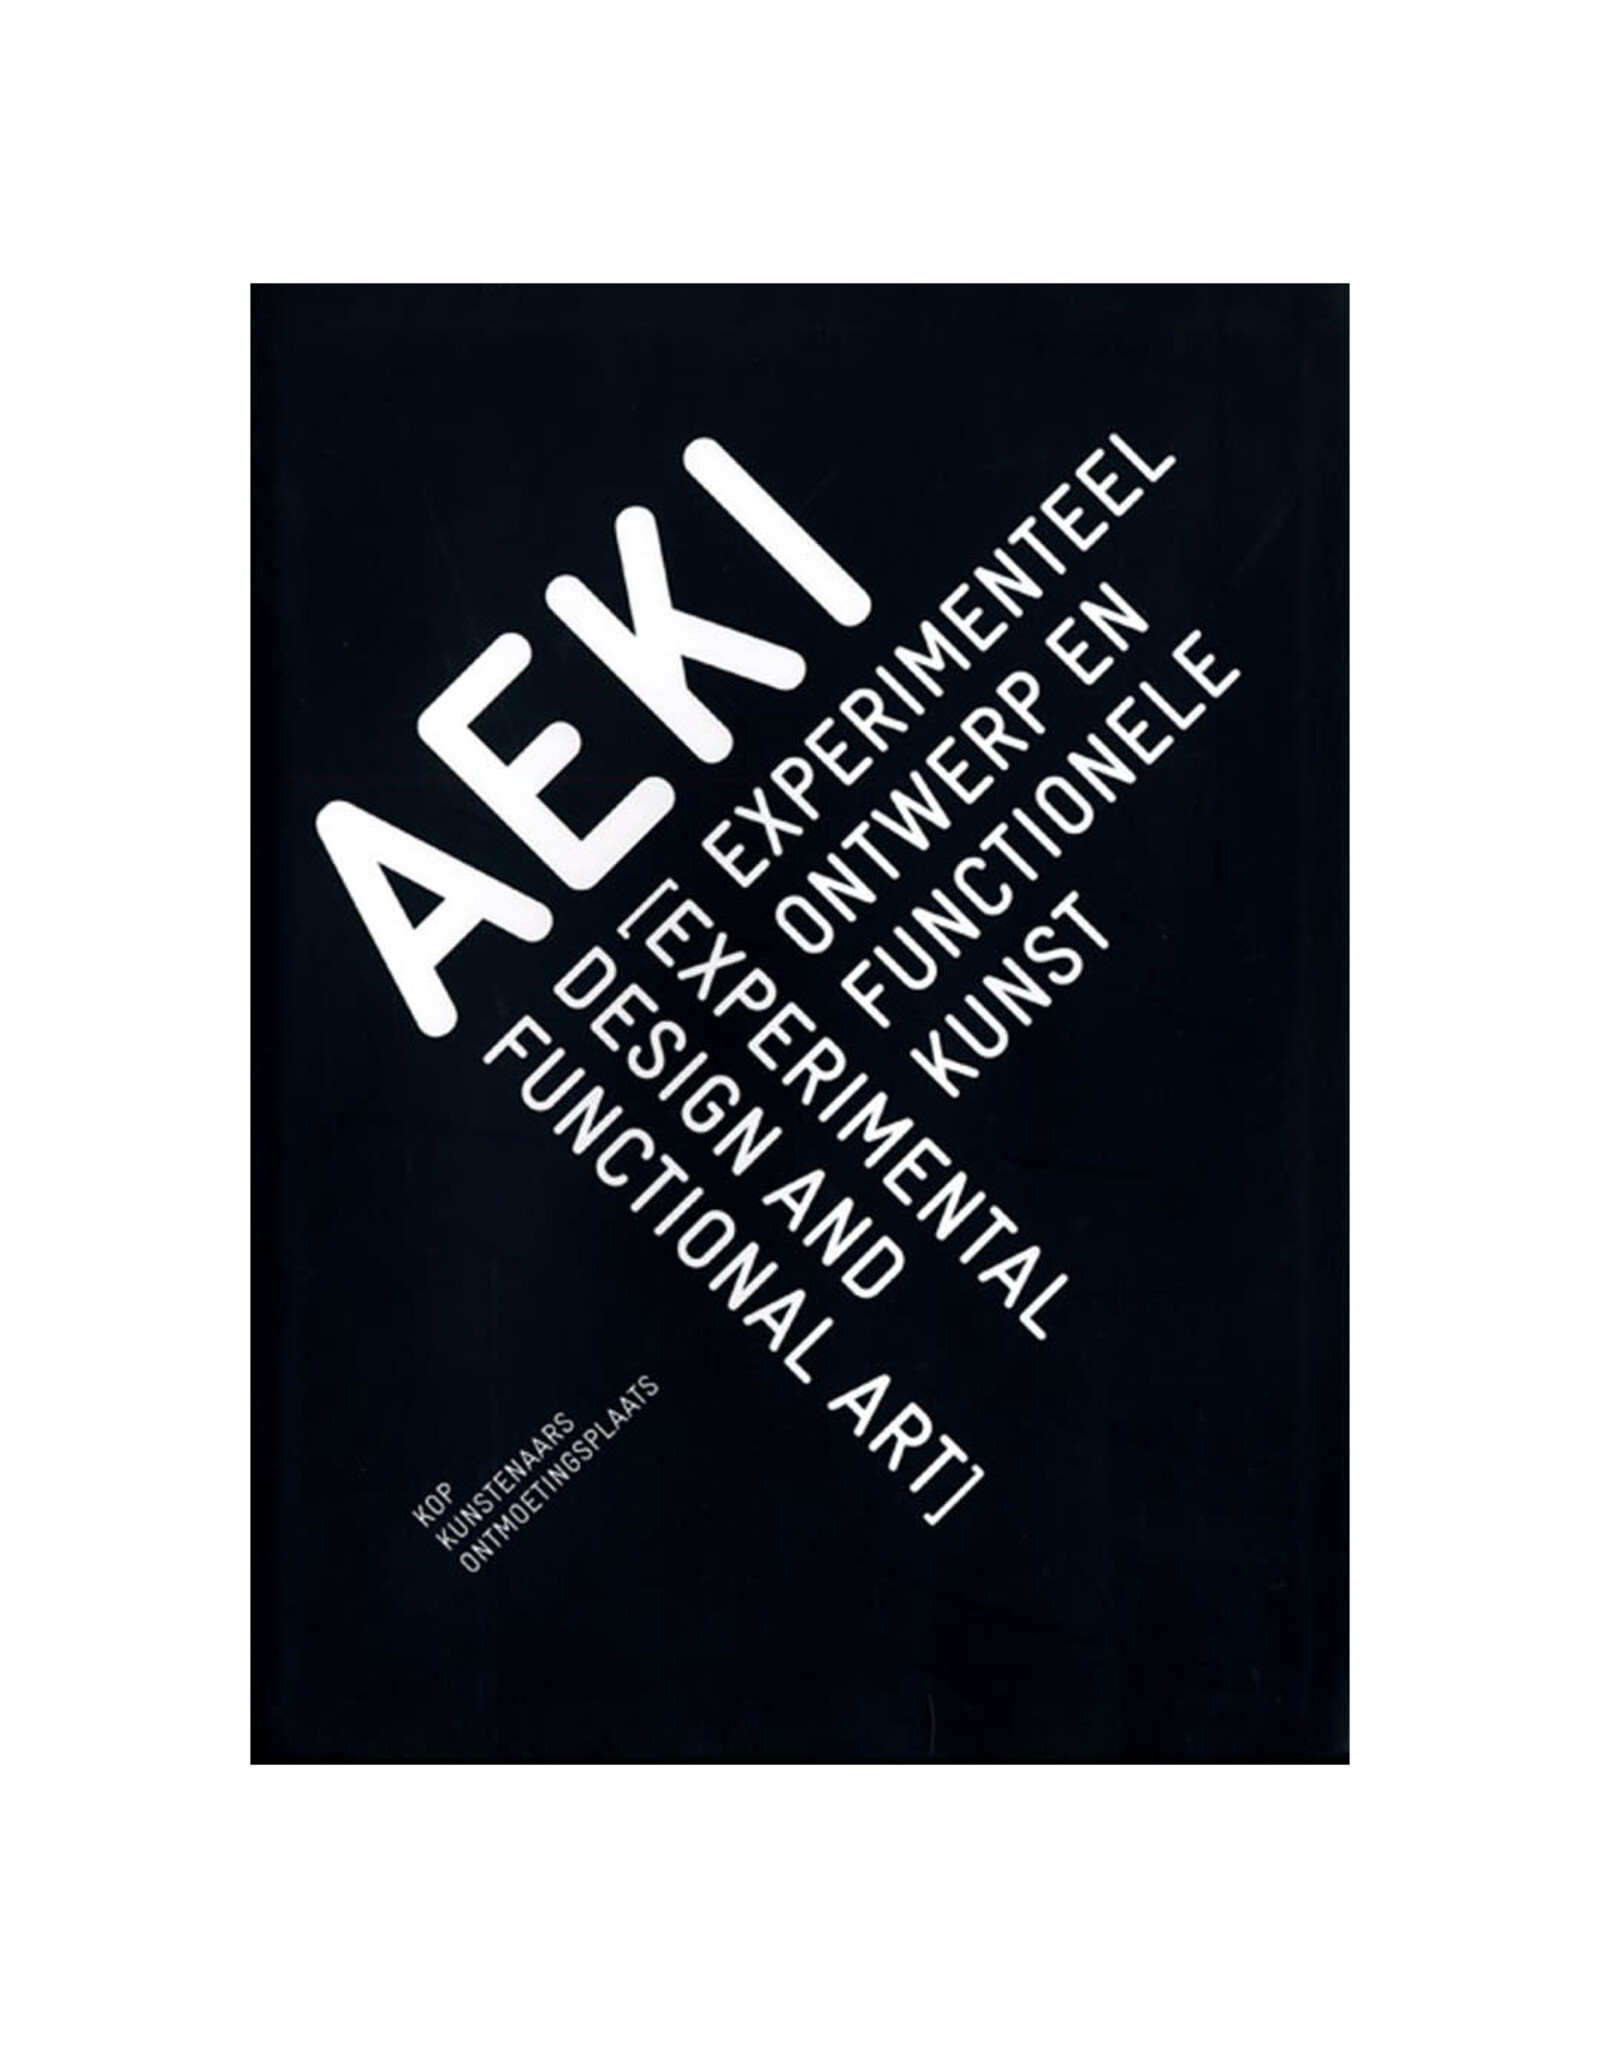 Aeki: Experimental Design and Functional Art